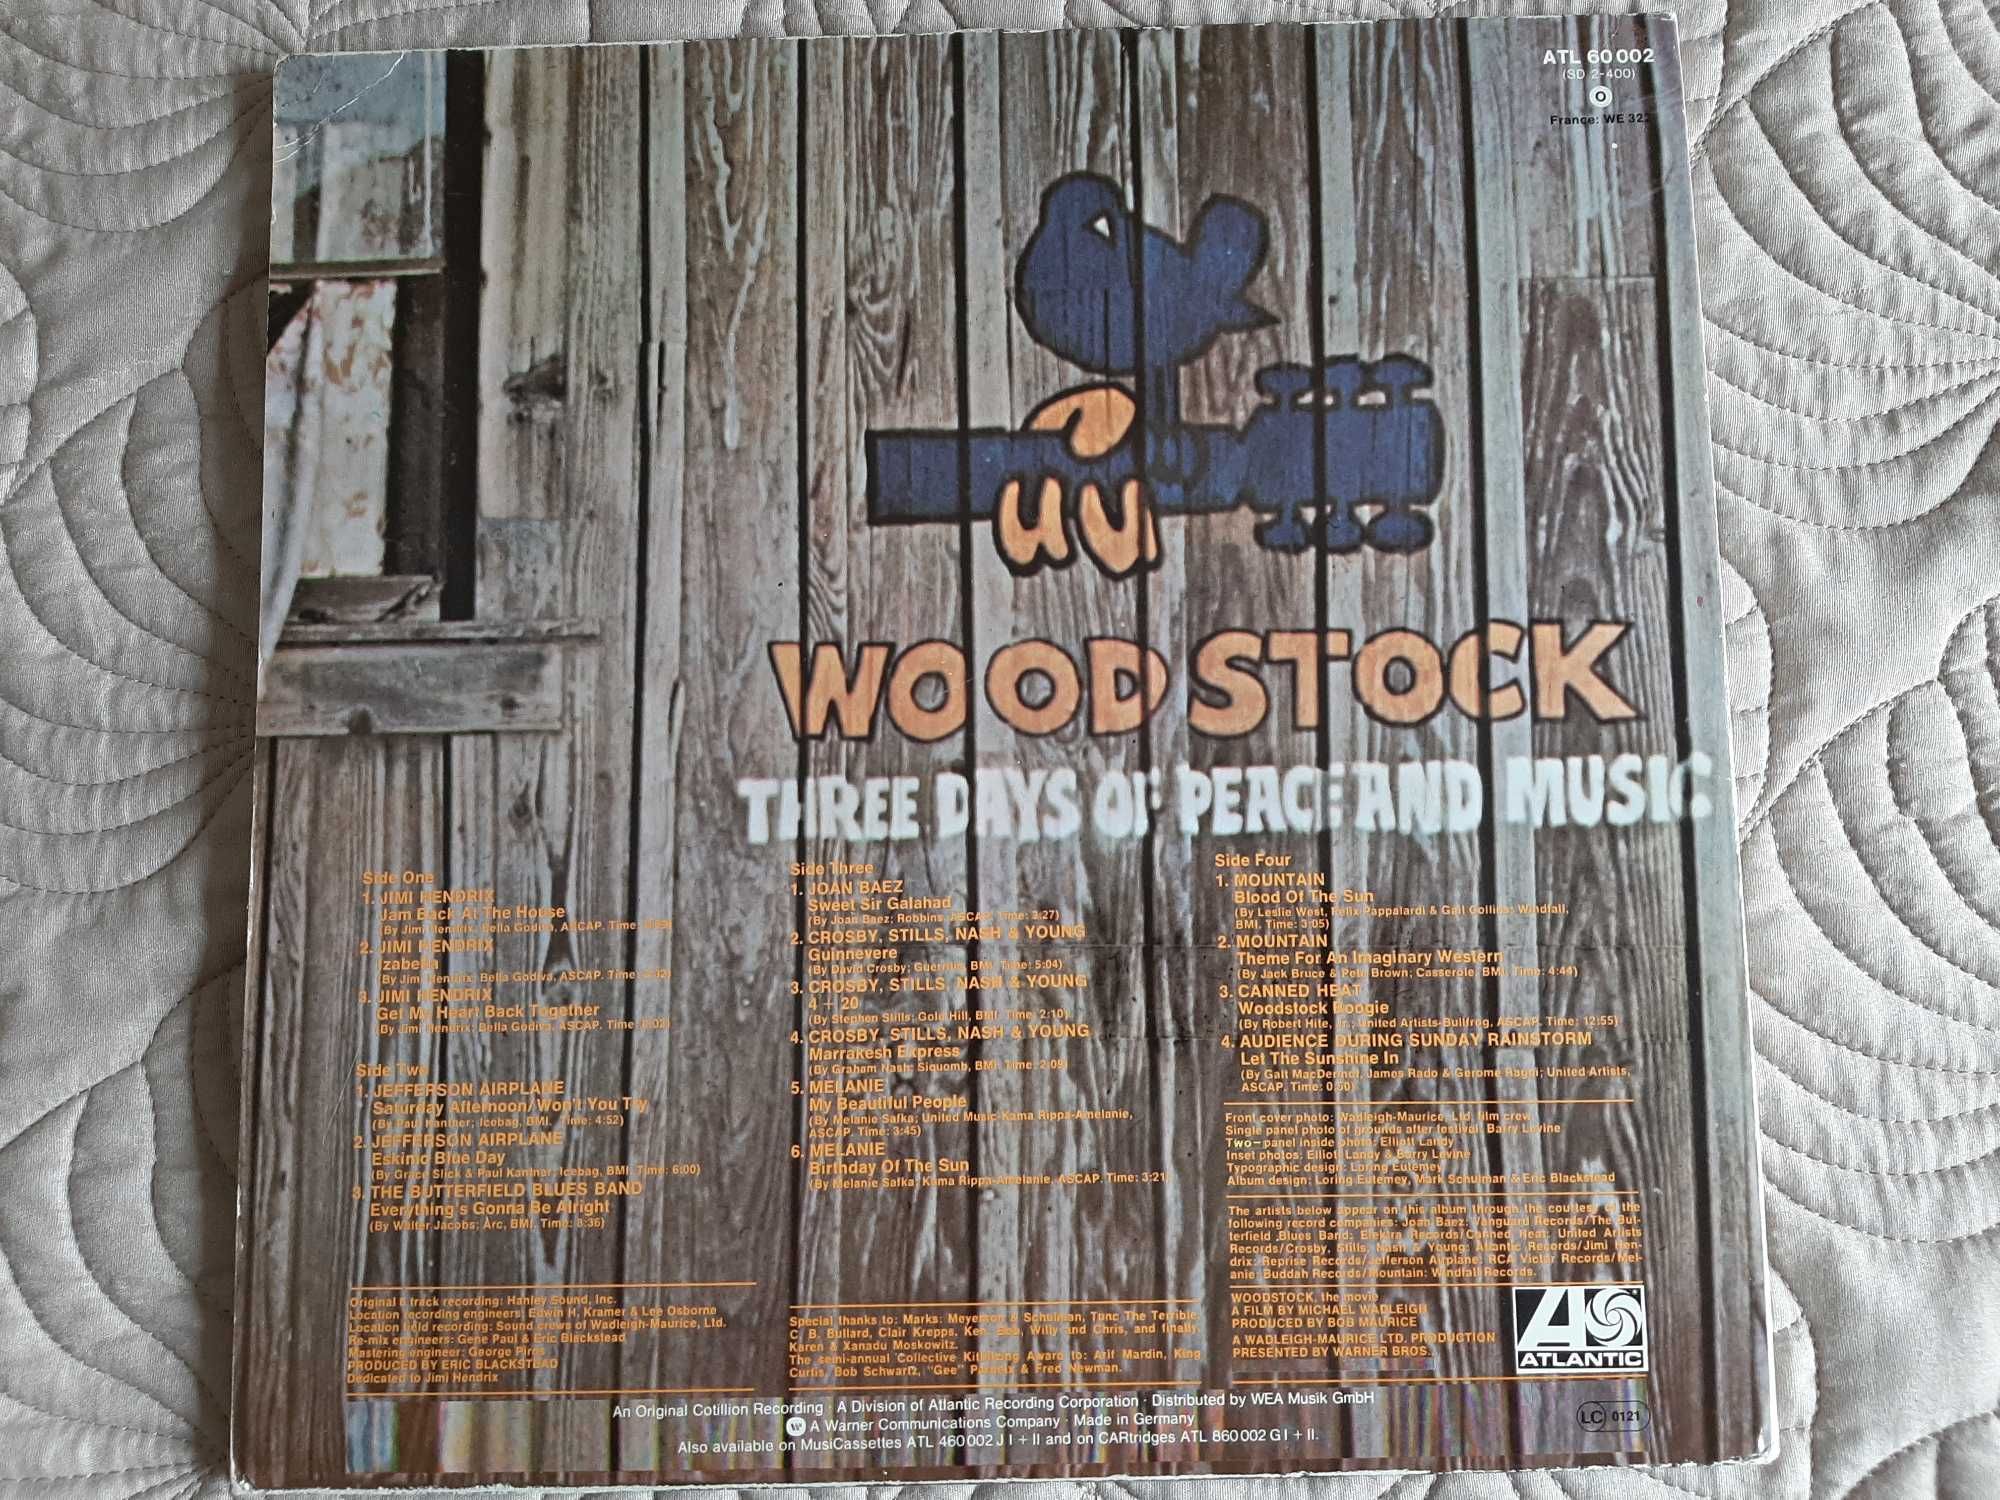 VÁRIOS - Woodstock Two - Europa - 2 x Vinil LP